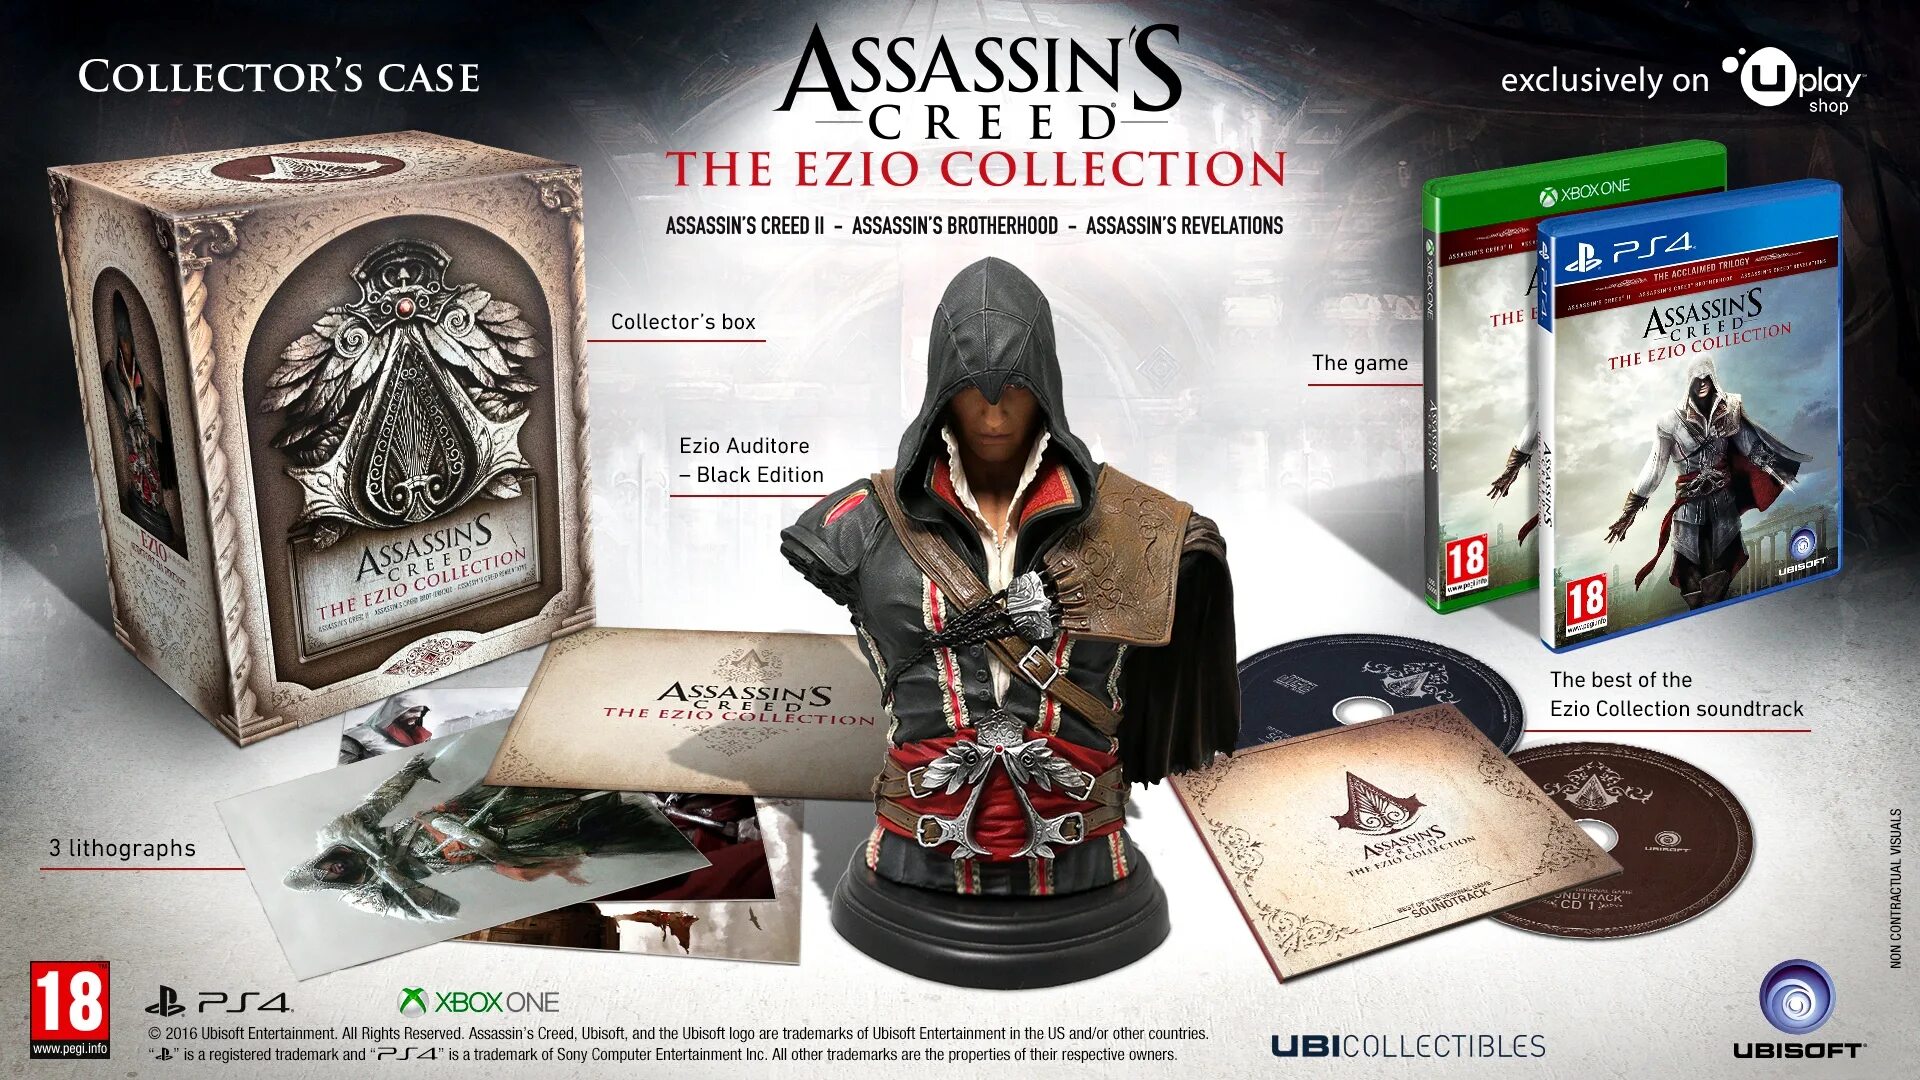 Коллекционное издание ассасин Крид 4. Assassin's Creed Эцио Аудиторе коллекция. Assassin's Creed коллекция Эцио ps4. Ассасин Крид 4 диск коллекционка. Assassin s ezio collection